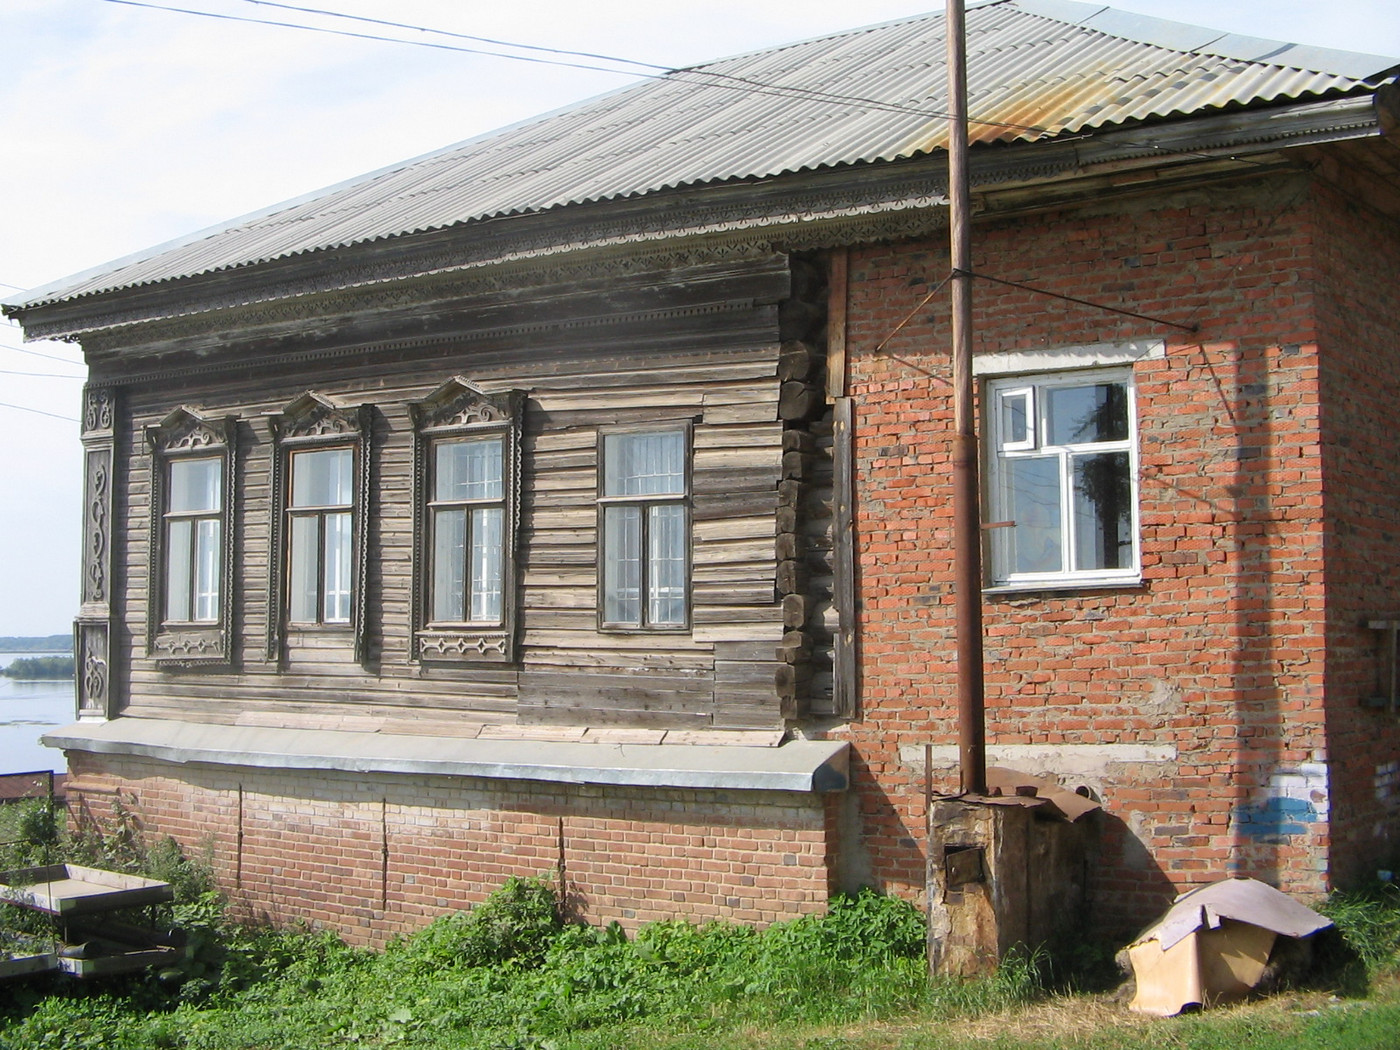 Жилой дом купца Вахрушева, село Каракулино, Каракулинский район Удмуртской Республики